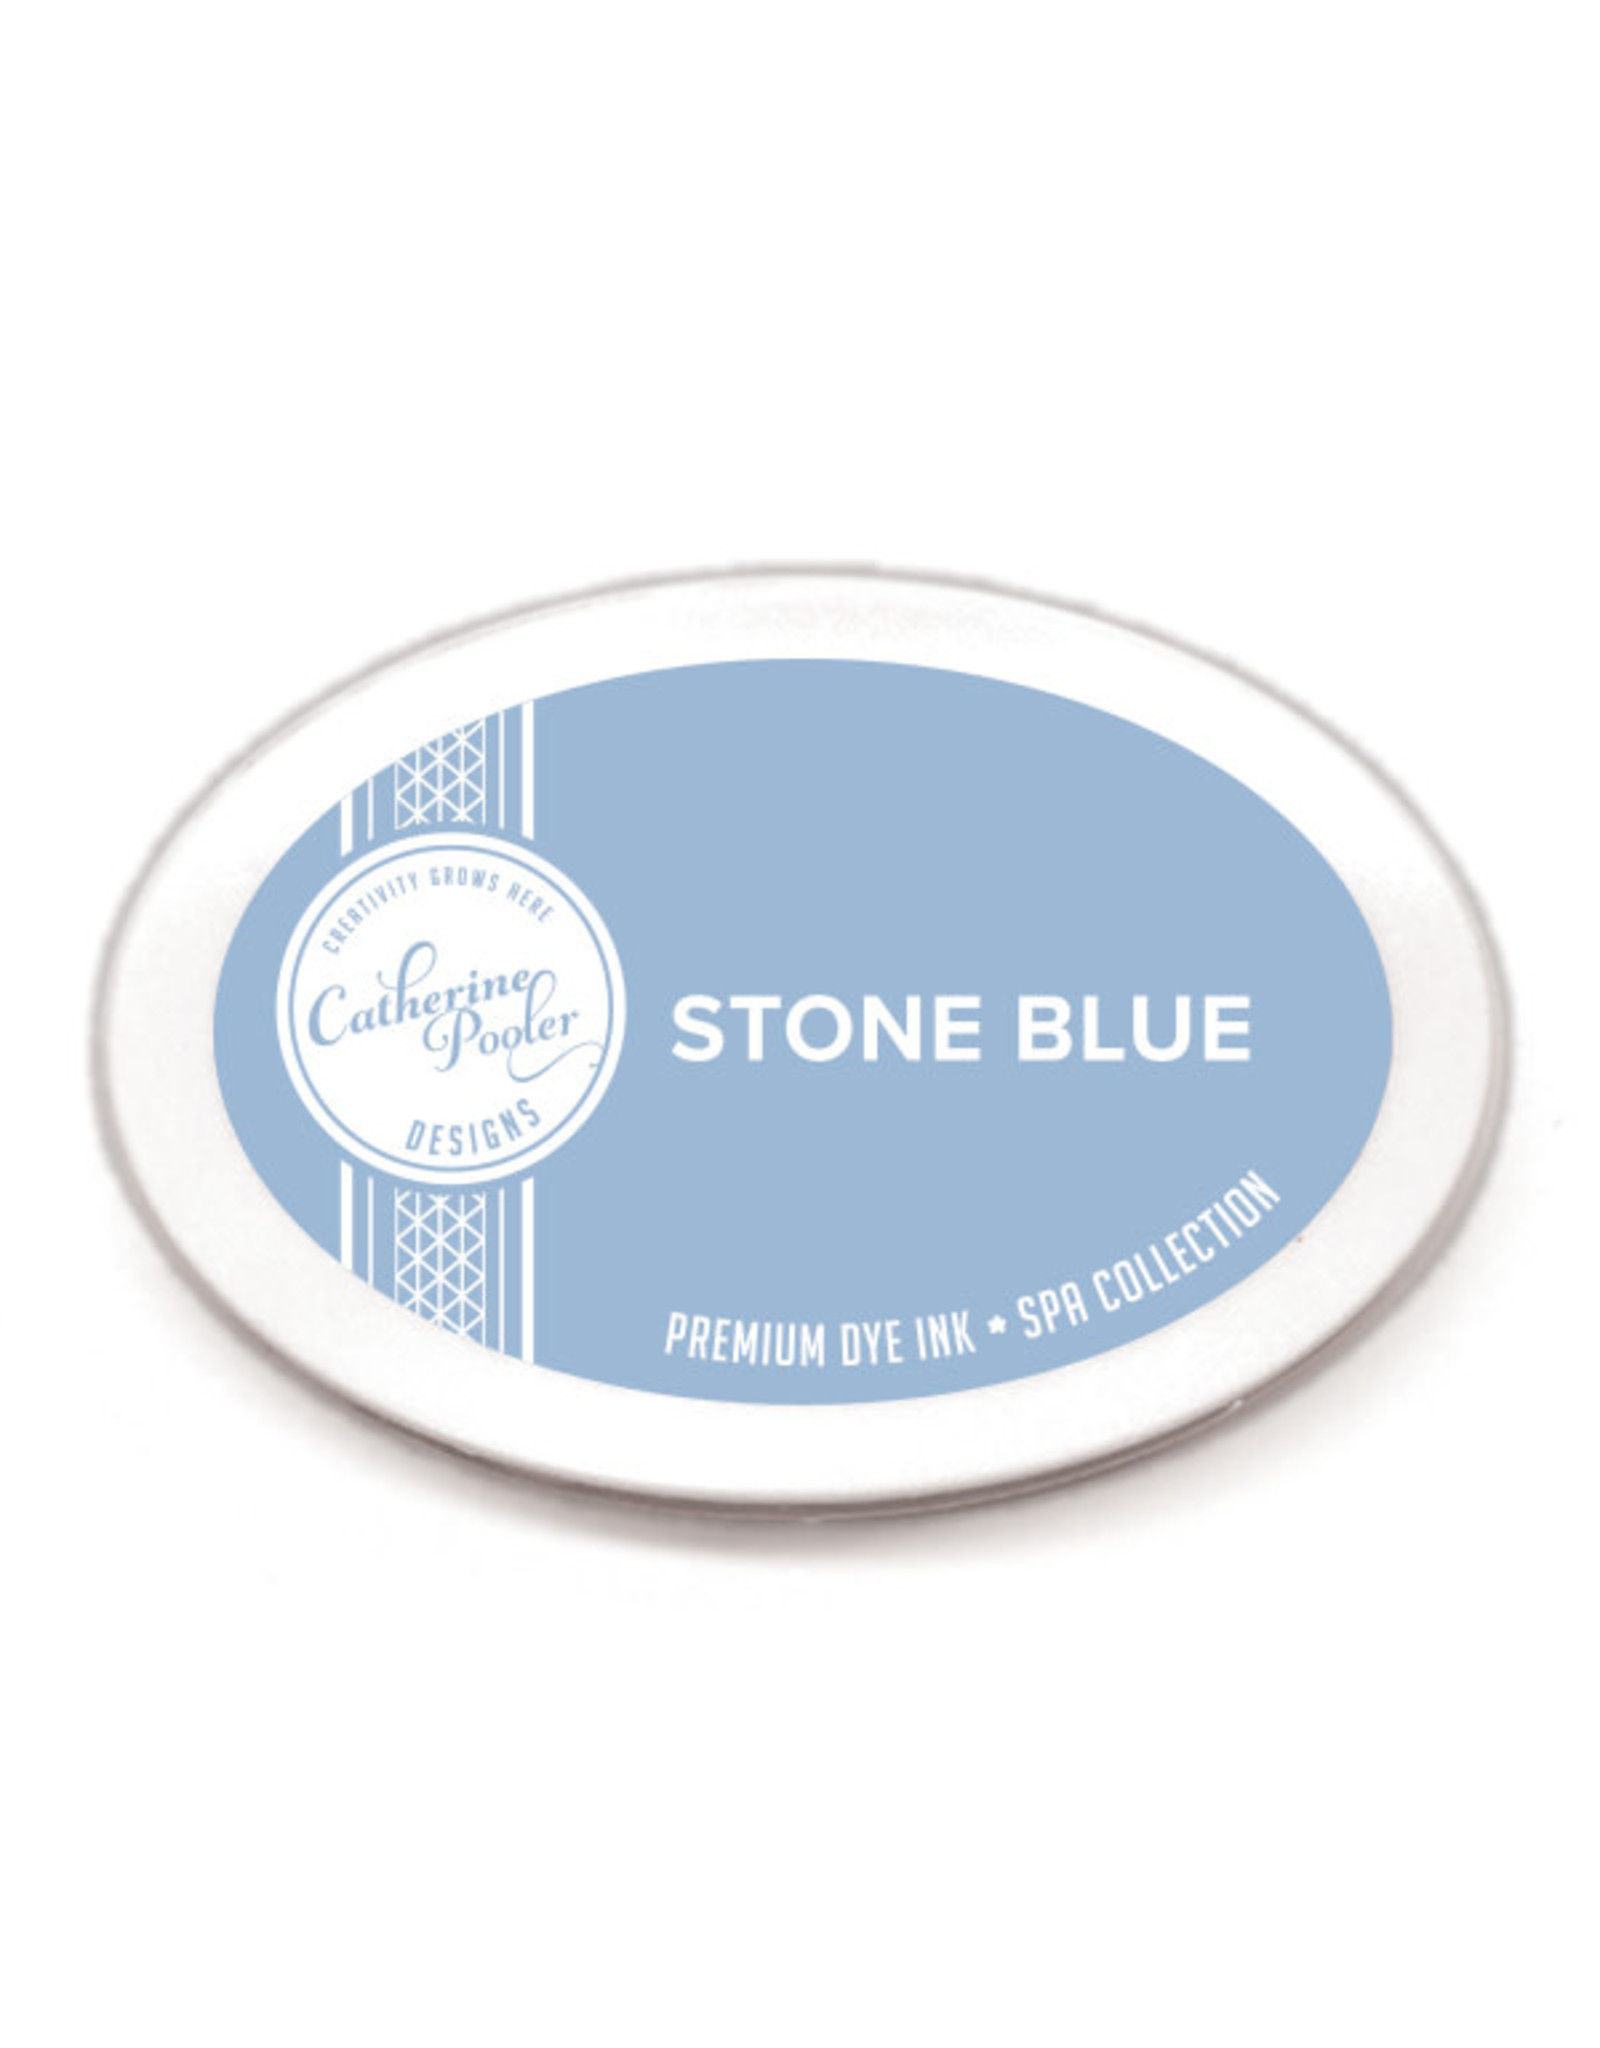 Catherine Pooler Designs Stone Blue Ink Pad